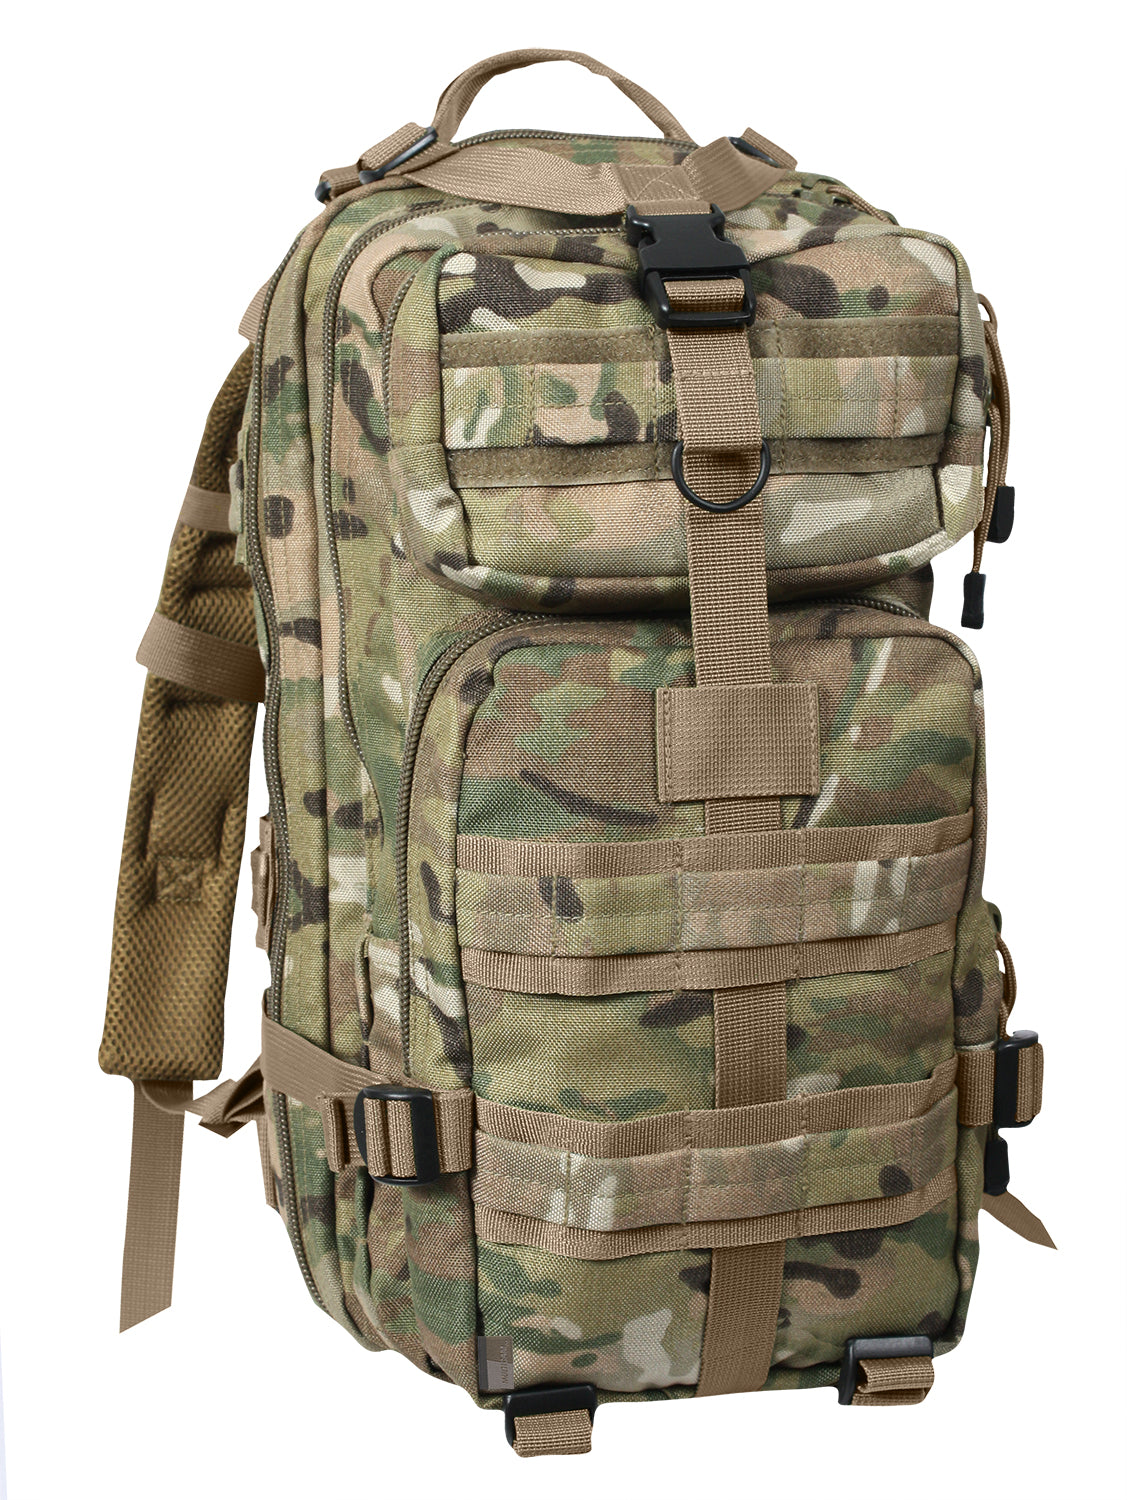 Milspec Military Trauma Kit First Aid Supplies & Snake Bite Kits MilTac Tactical Military Outdoor Gear Australia